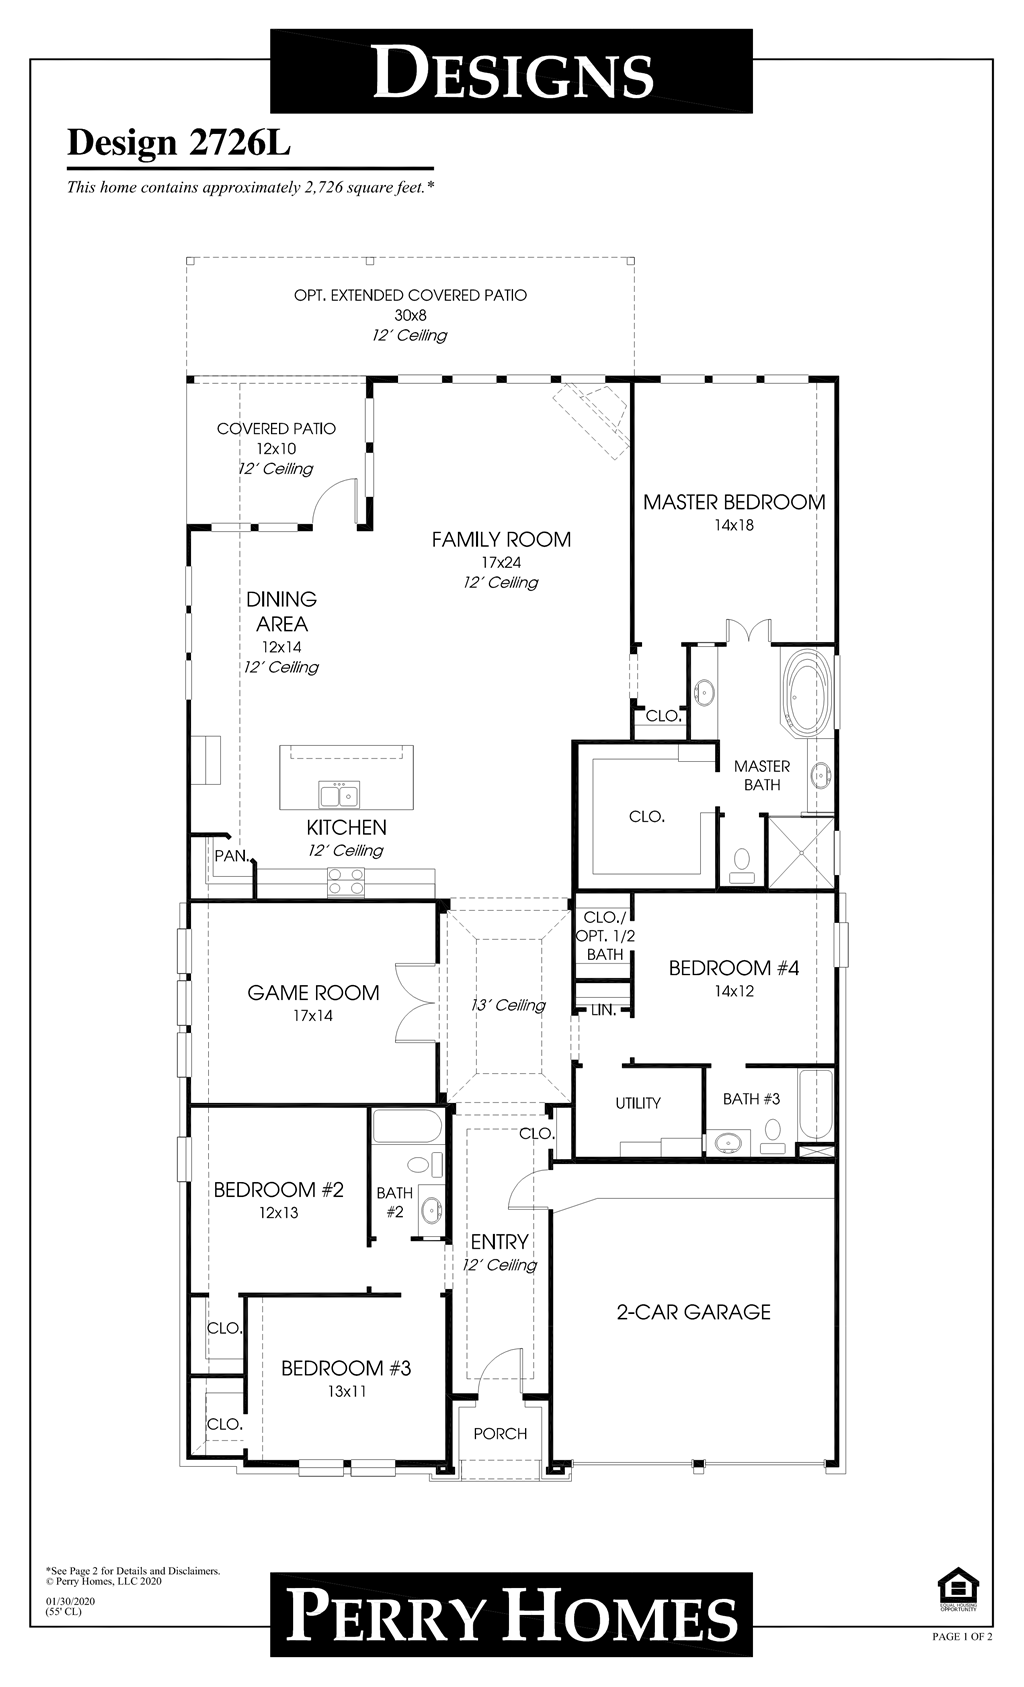 Floor Plan for 2726L